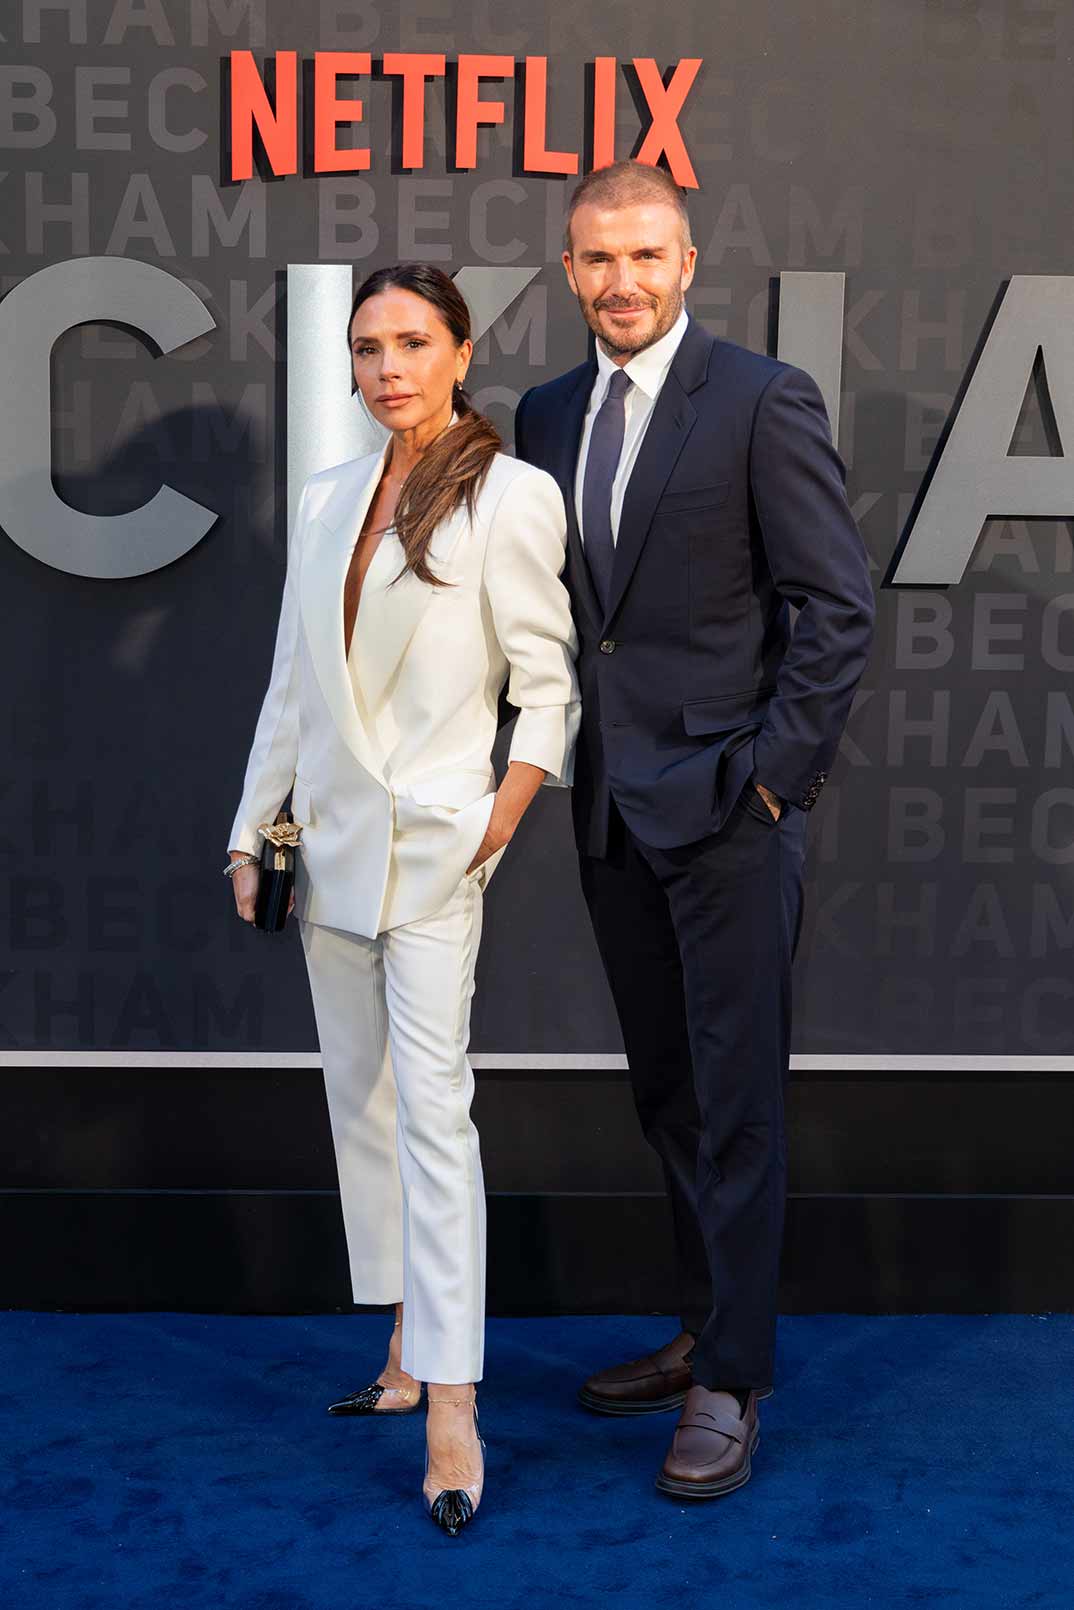 David Beckham y Victoria Beckham - 'Beckham' Estreno en Londres © Photo by StillMoving.Net for Netflix